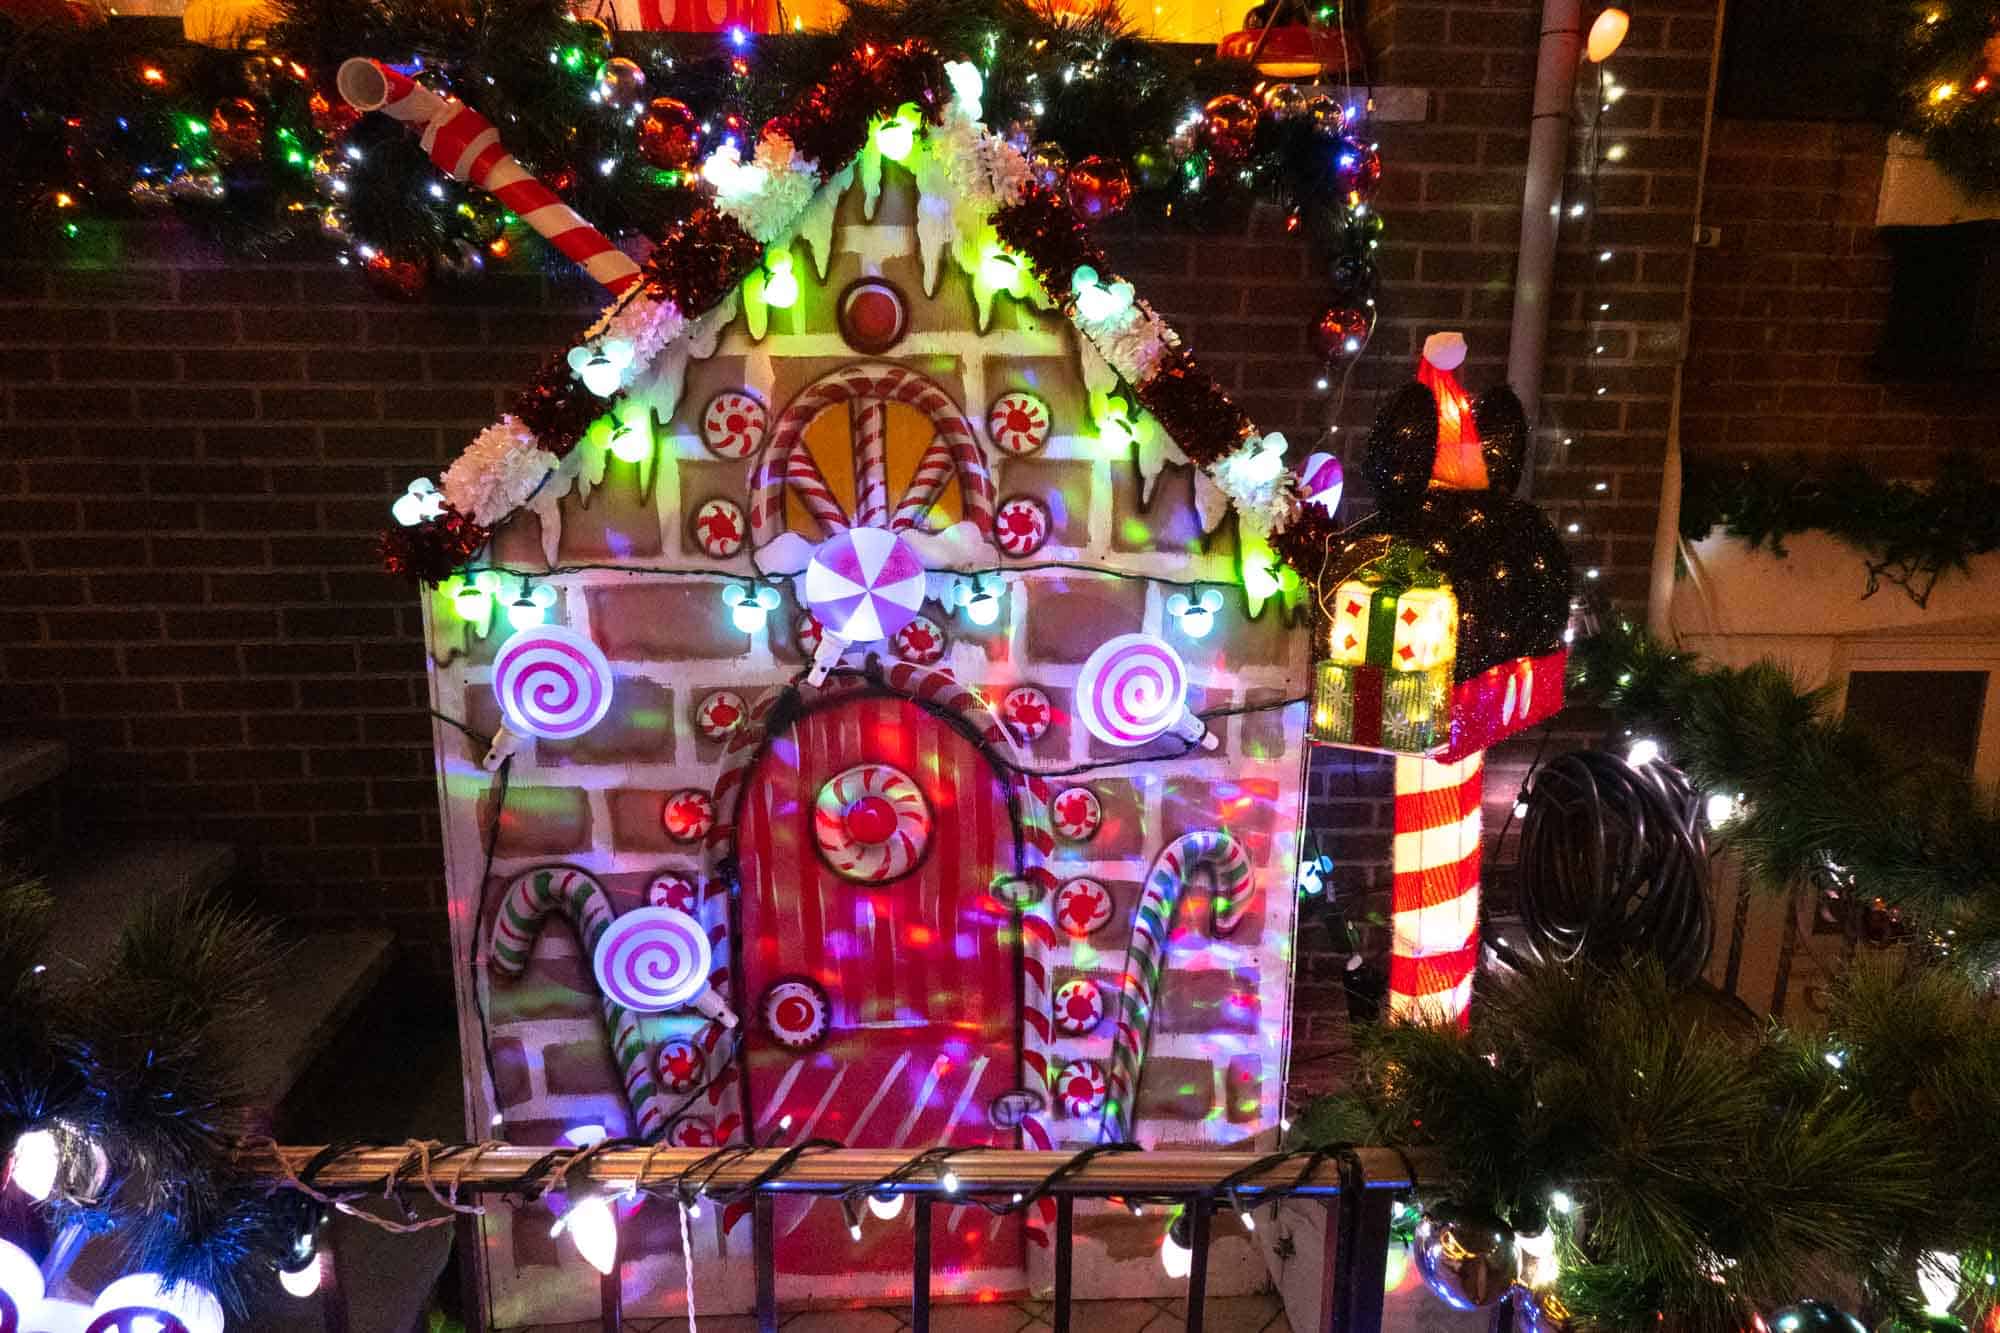 Illuminated gingerbread house Christmas display